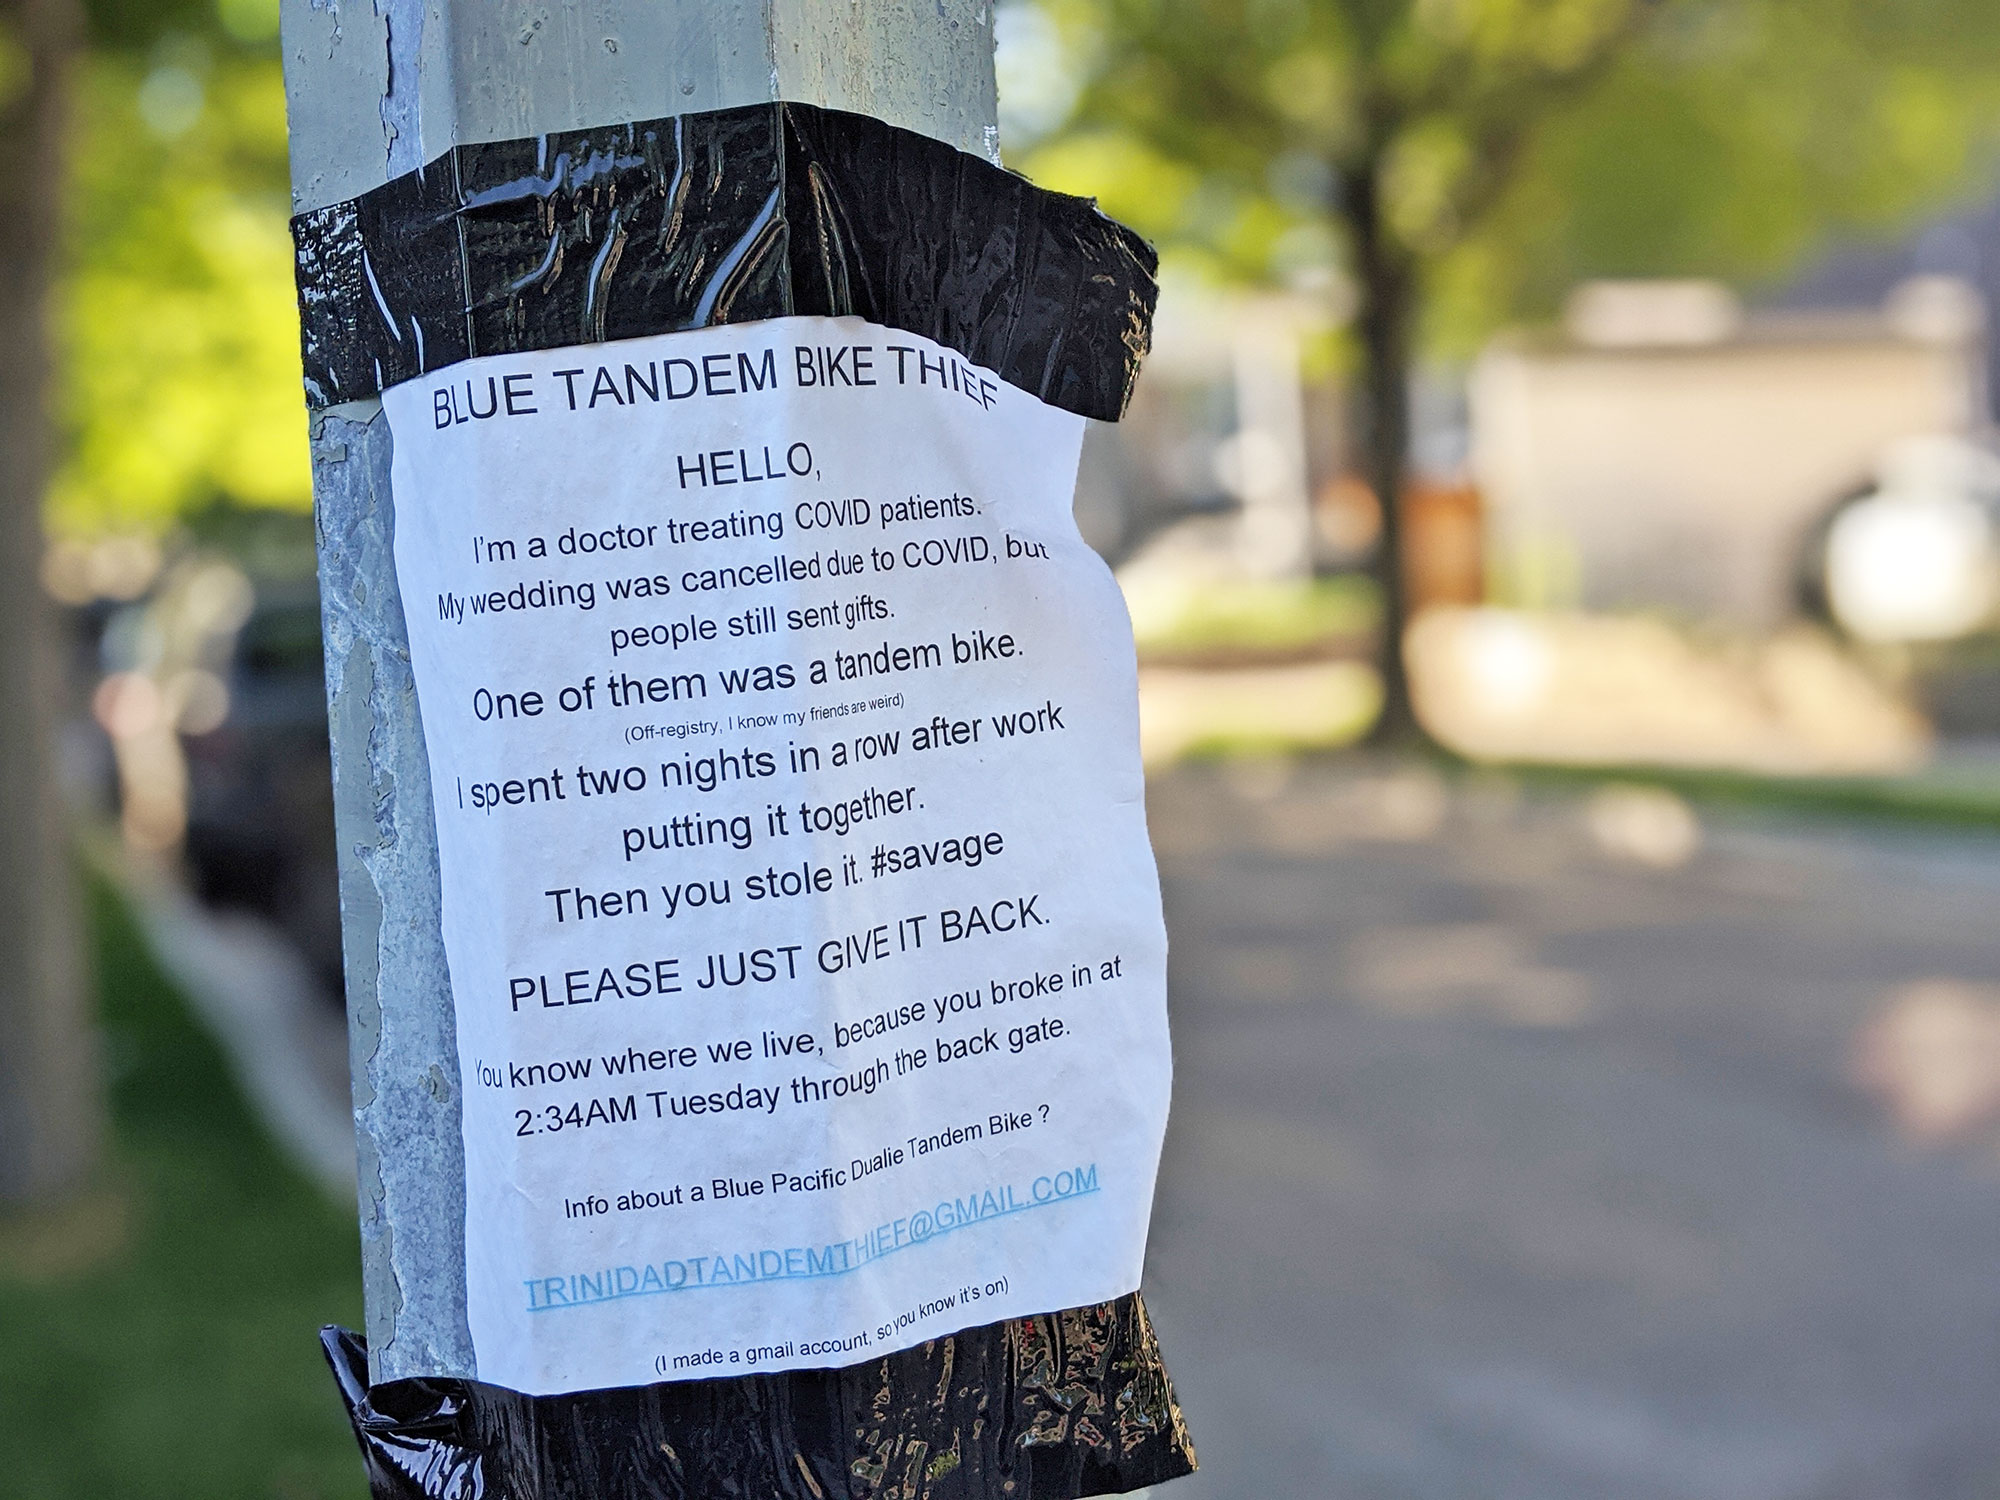 A stolen tandem bike poster in Trinidad, Washington DC, near Gallaudet University.